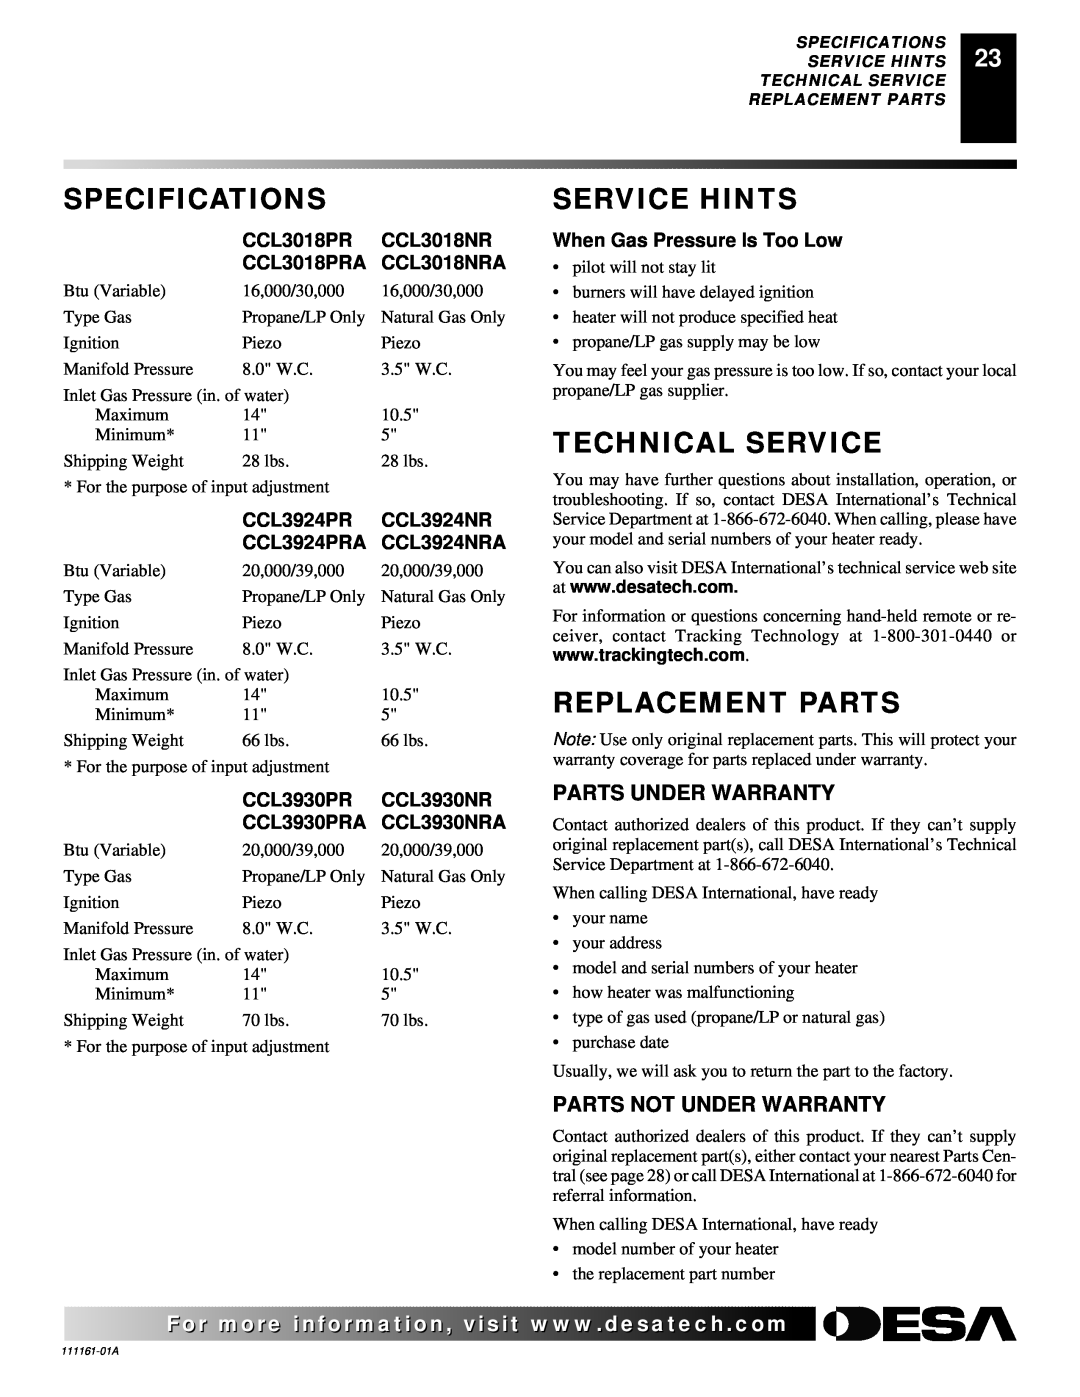 Desa CCL3924NRA Specifications, Service Hints, Technical Service, Replacement Parts, Parts Under Warranty, CCL3018PR 